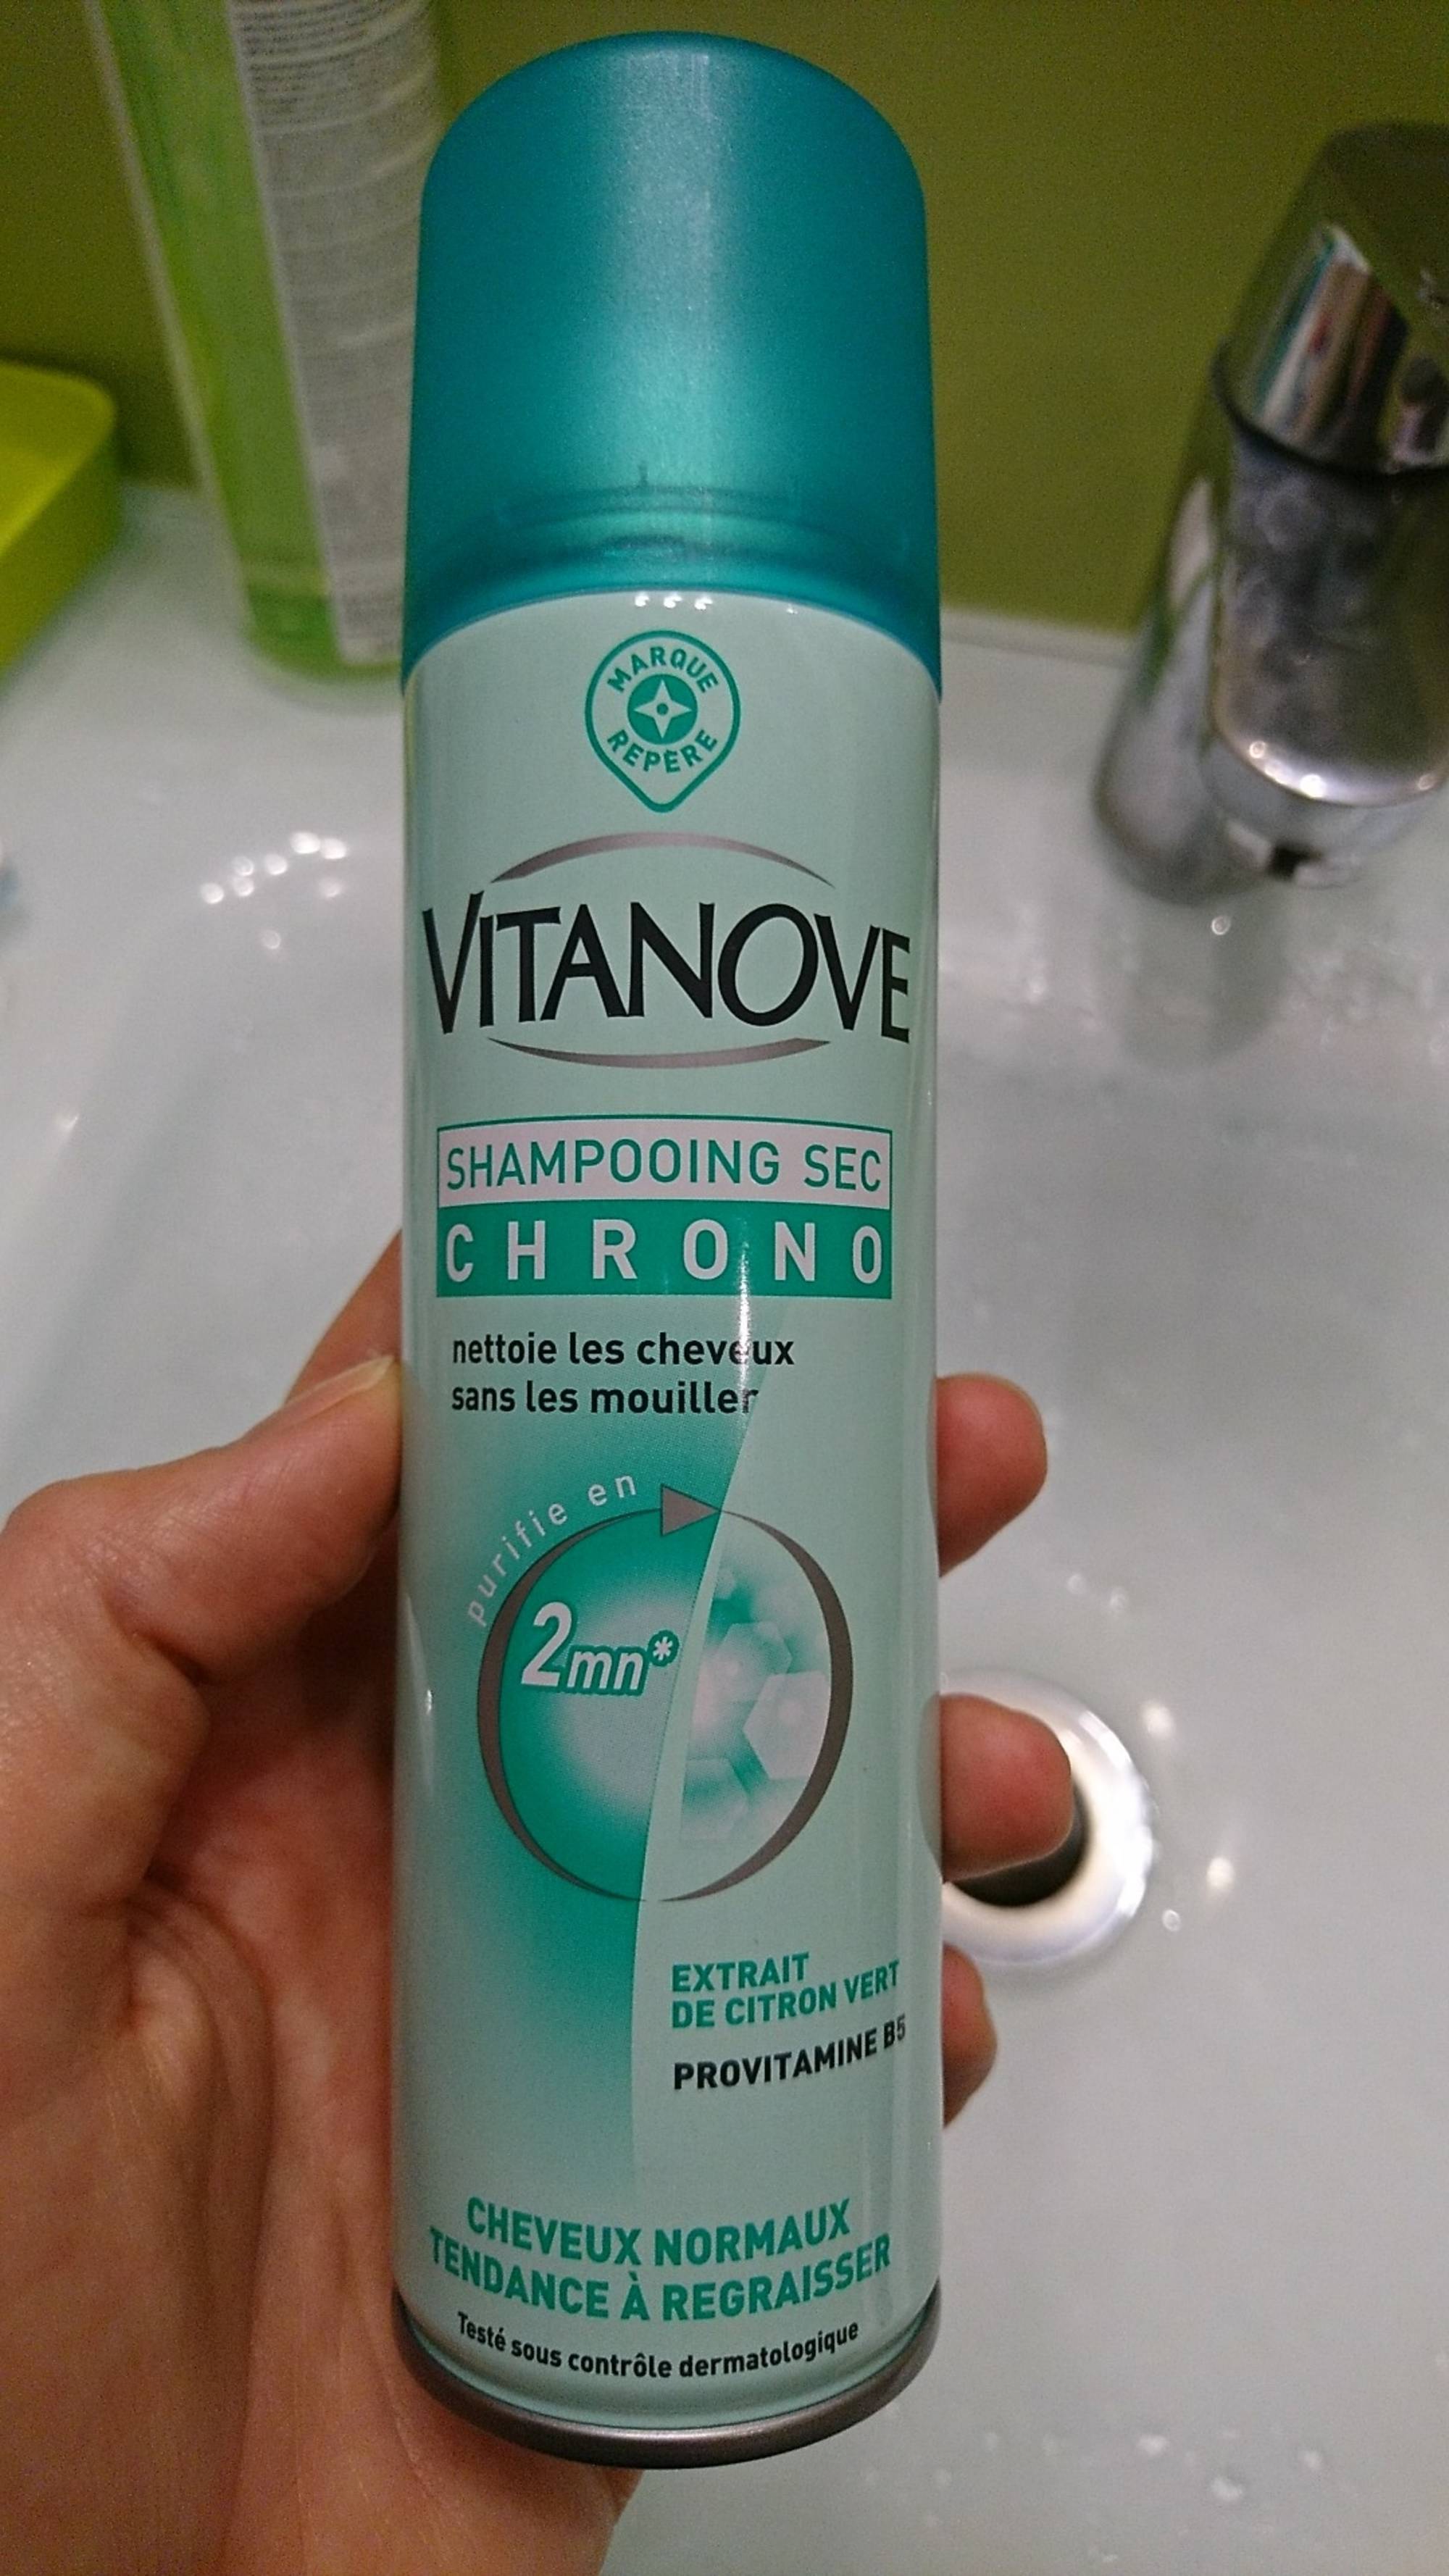 VITANOVE - Shampooing sec chrono 2mn